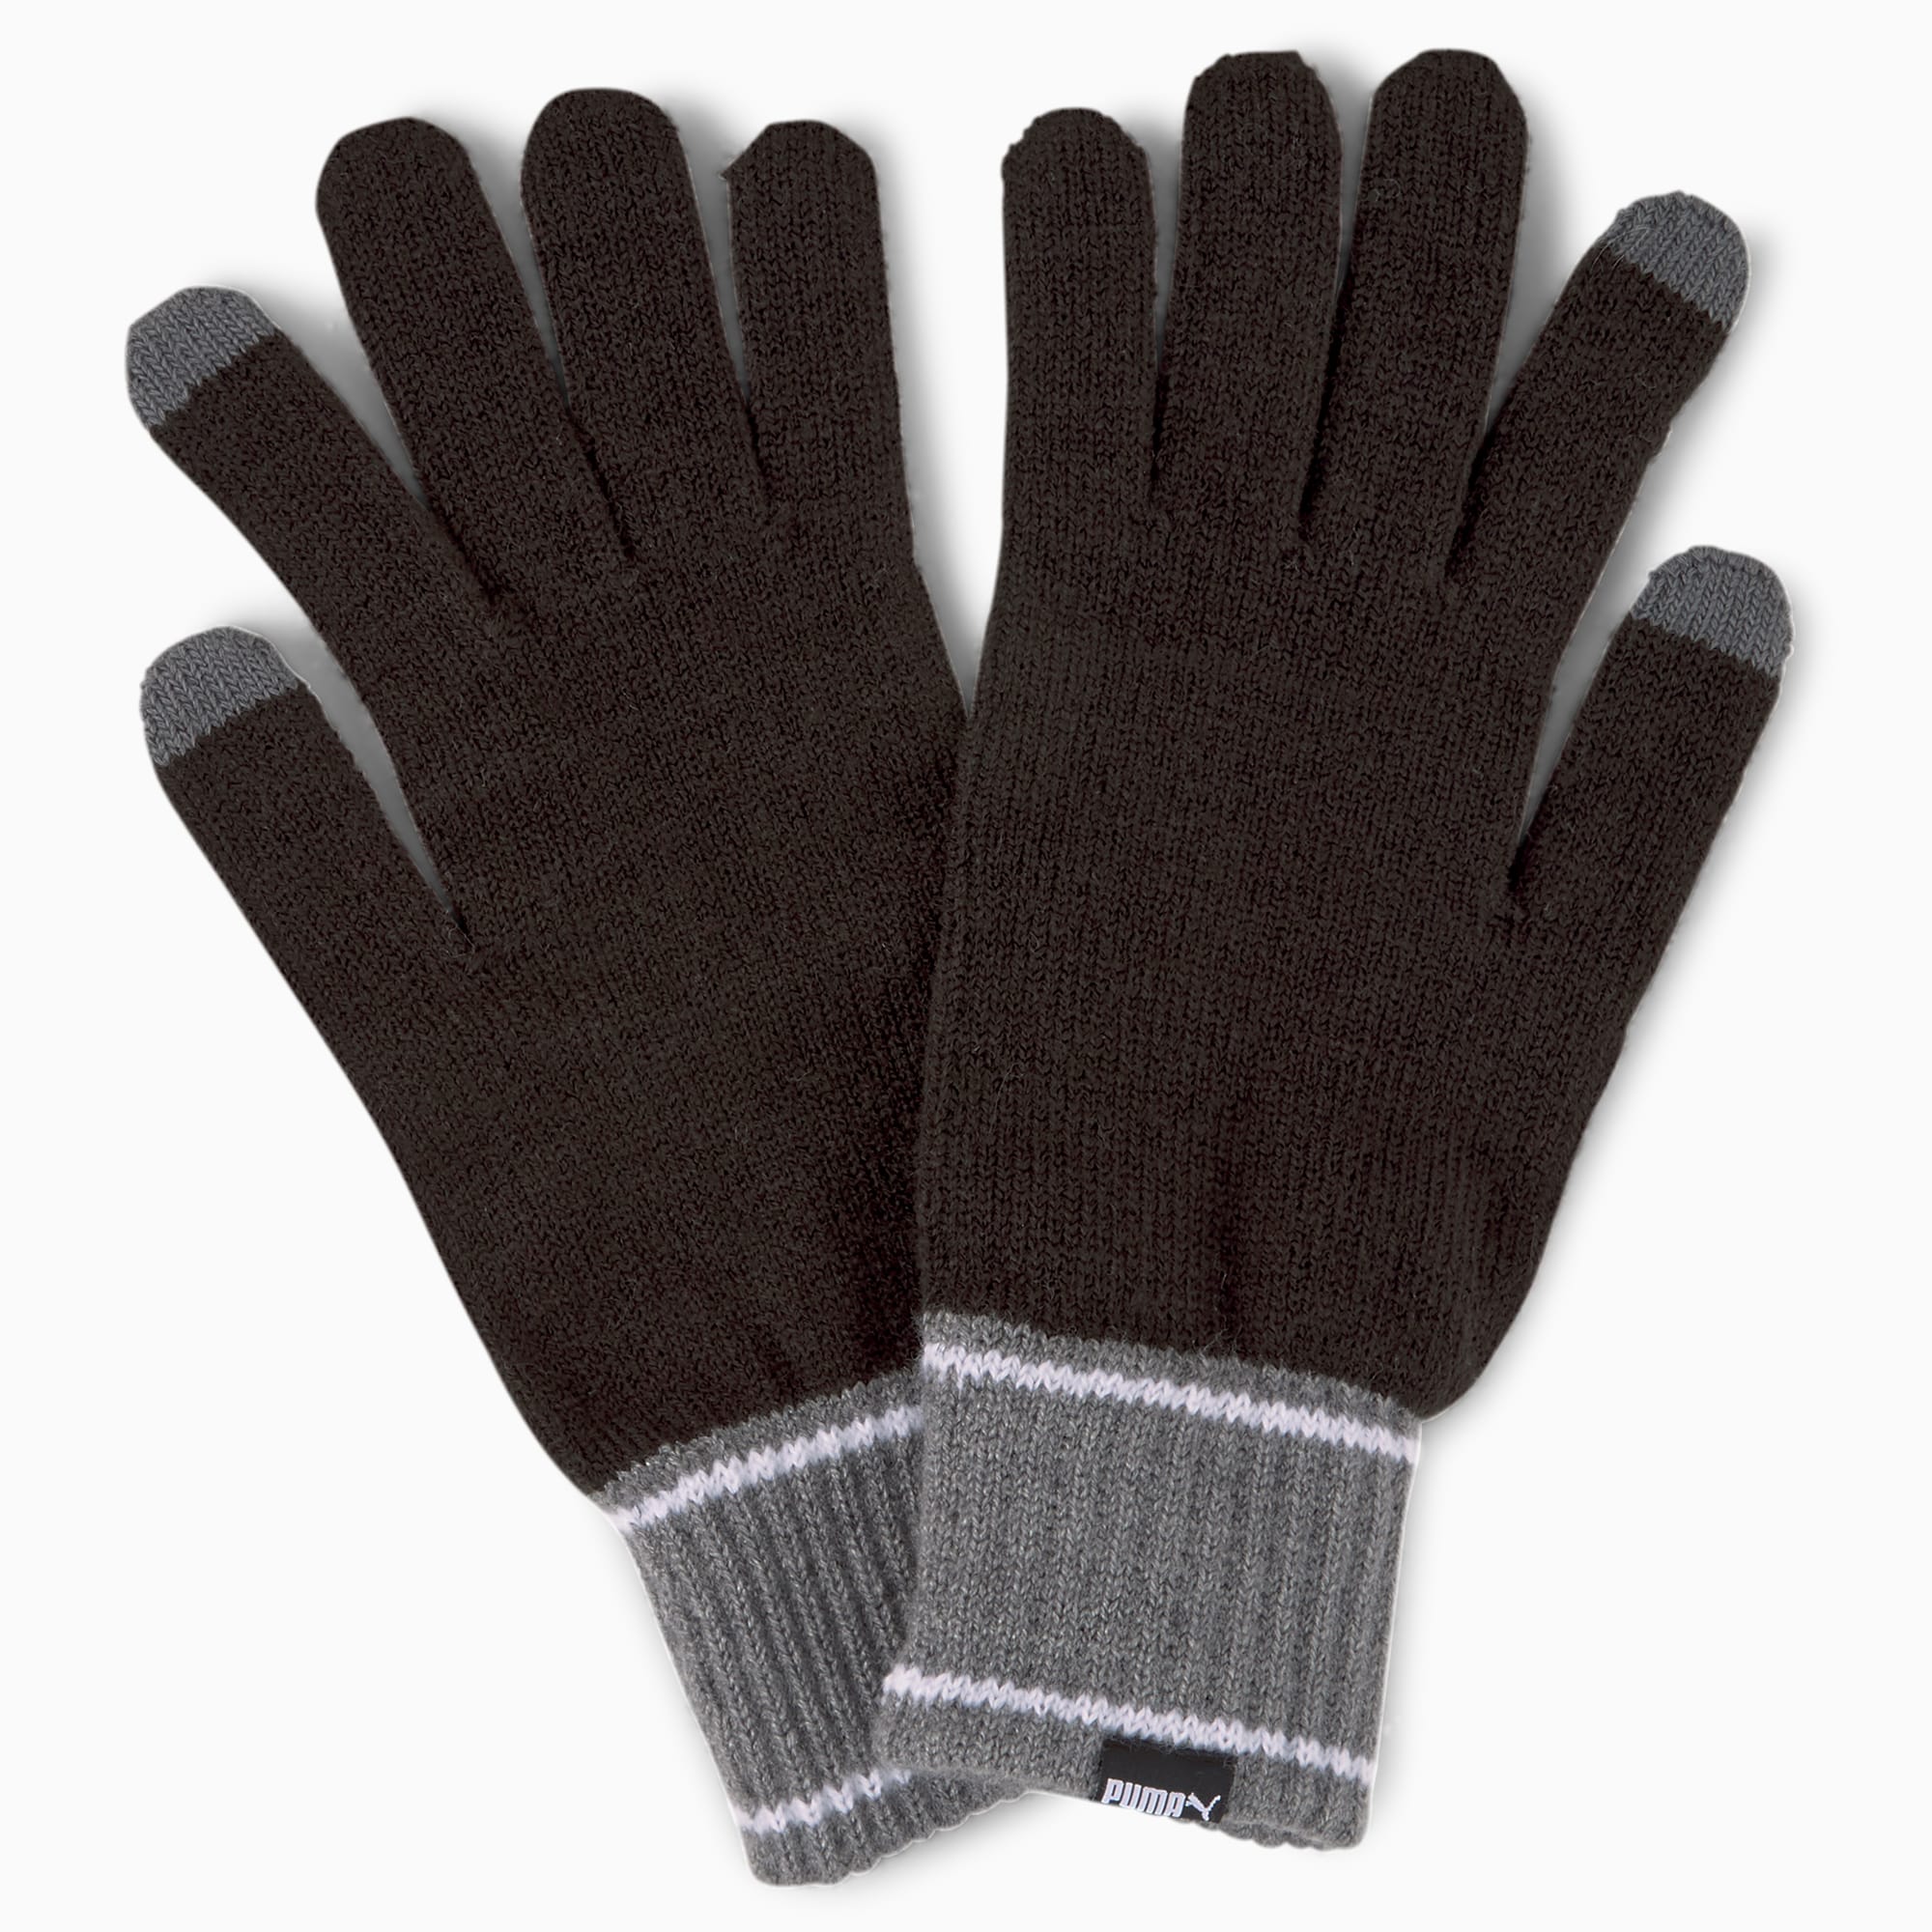 Puma Knit Handschoenen (Paar) Zwart/Grijze Heide - S